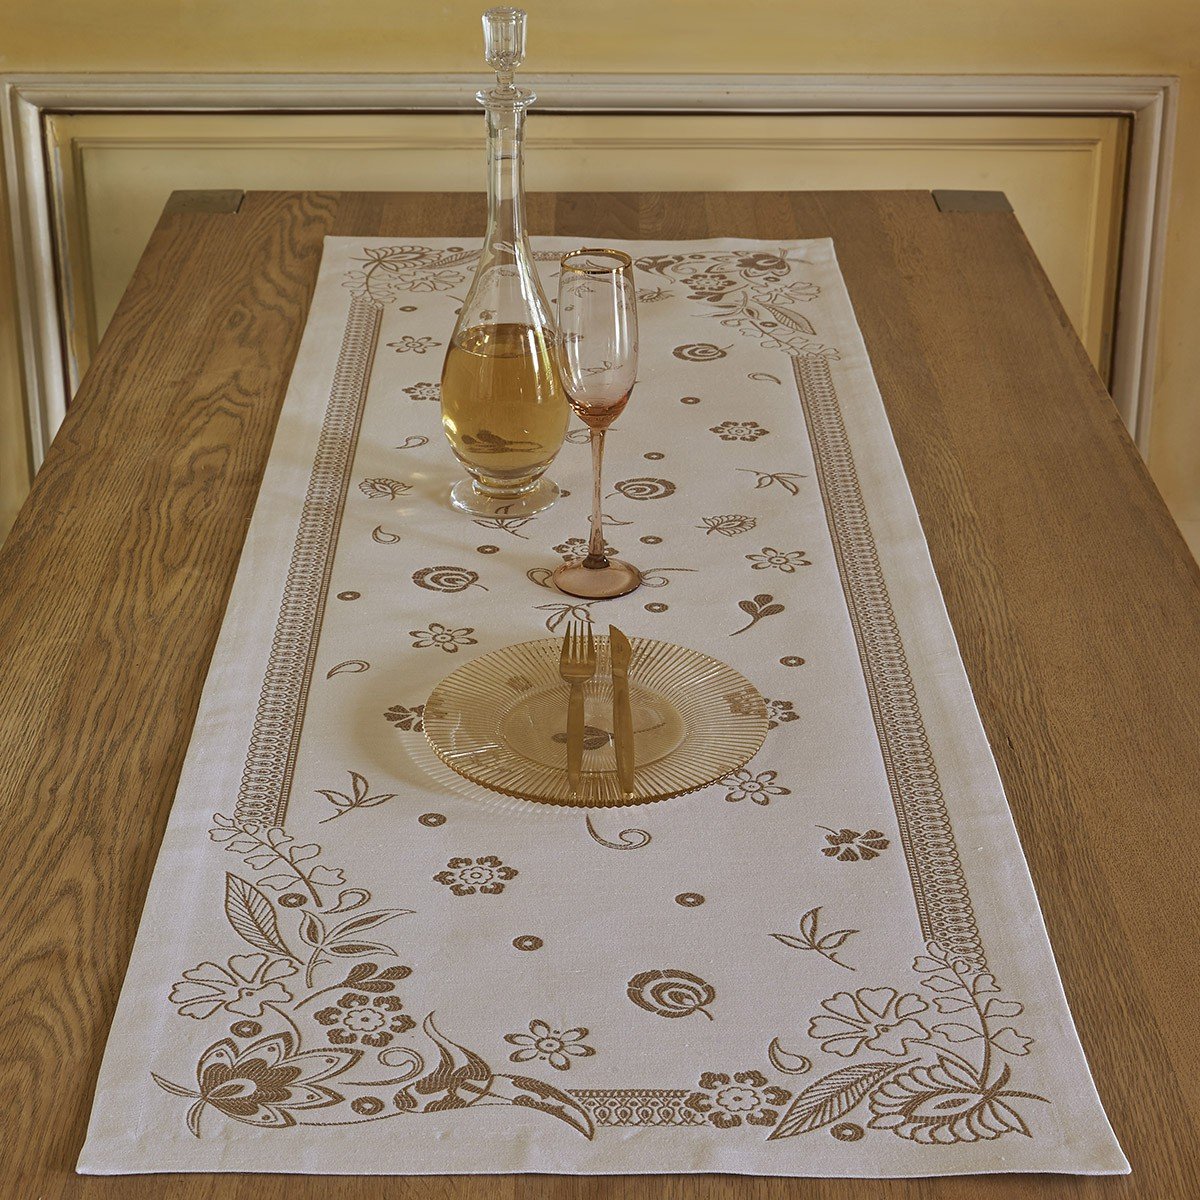 Fig Linens - Le Jacquard Francais - Haute Couture Gold Table Linens - Table runner